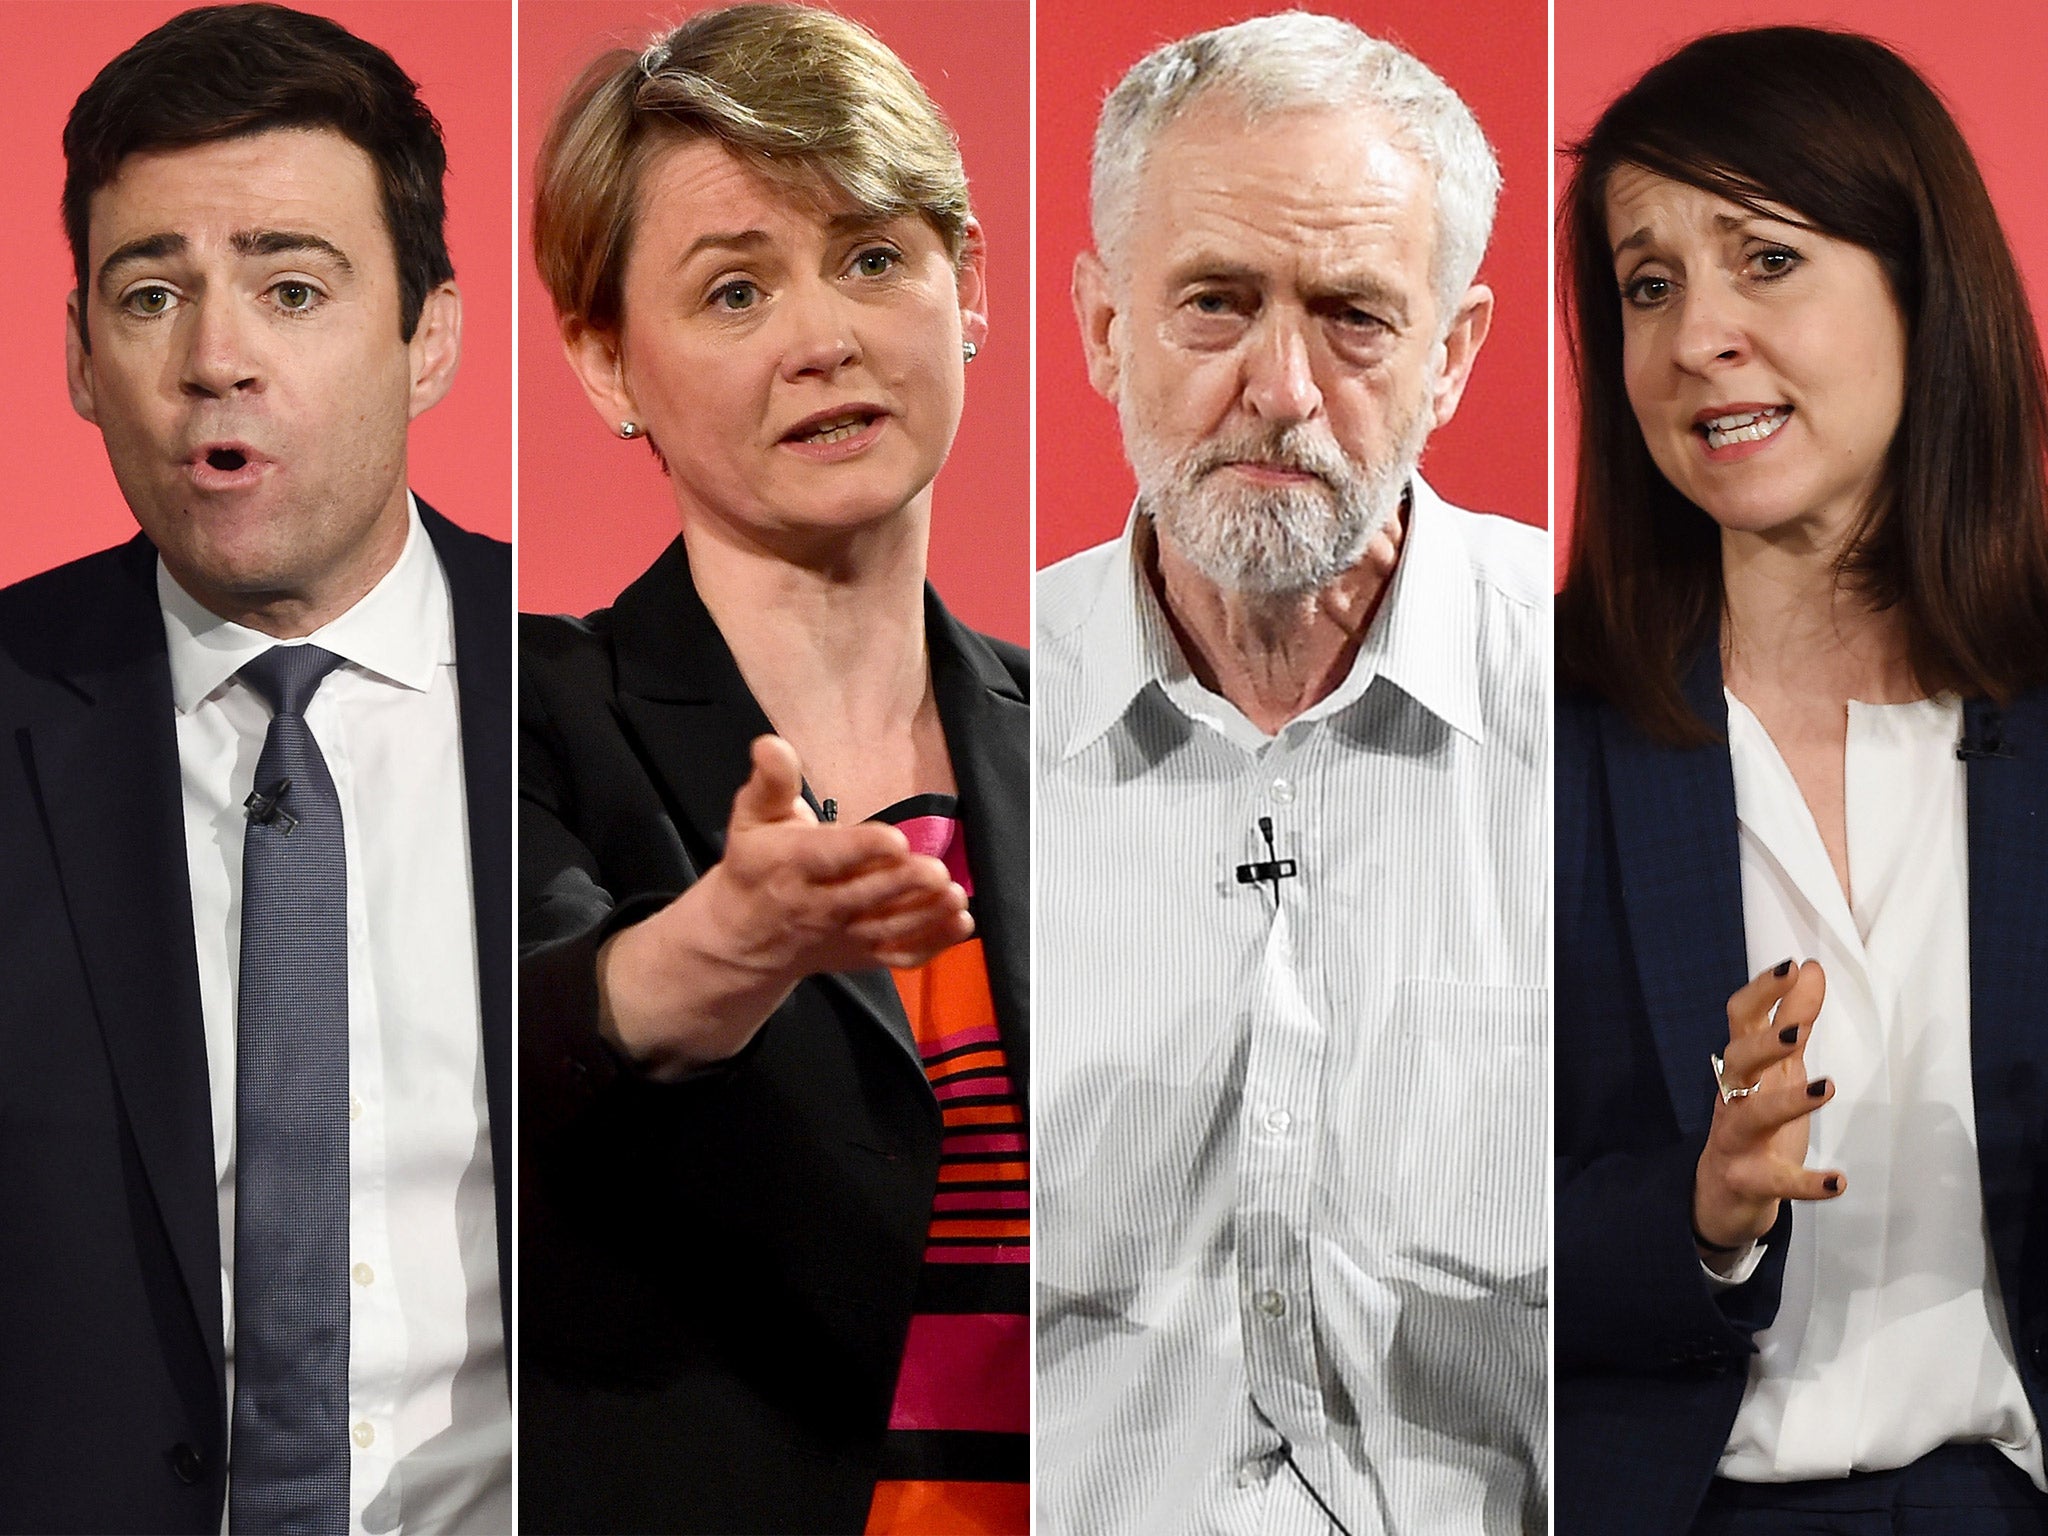 Labour leadership hopefuls: Andy Burnham, Yvette Cooper, Jeremy Corbyn and Liz Kendall